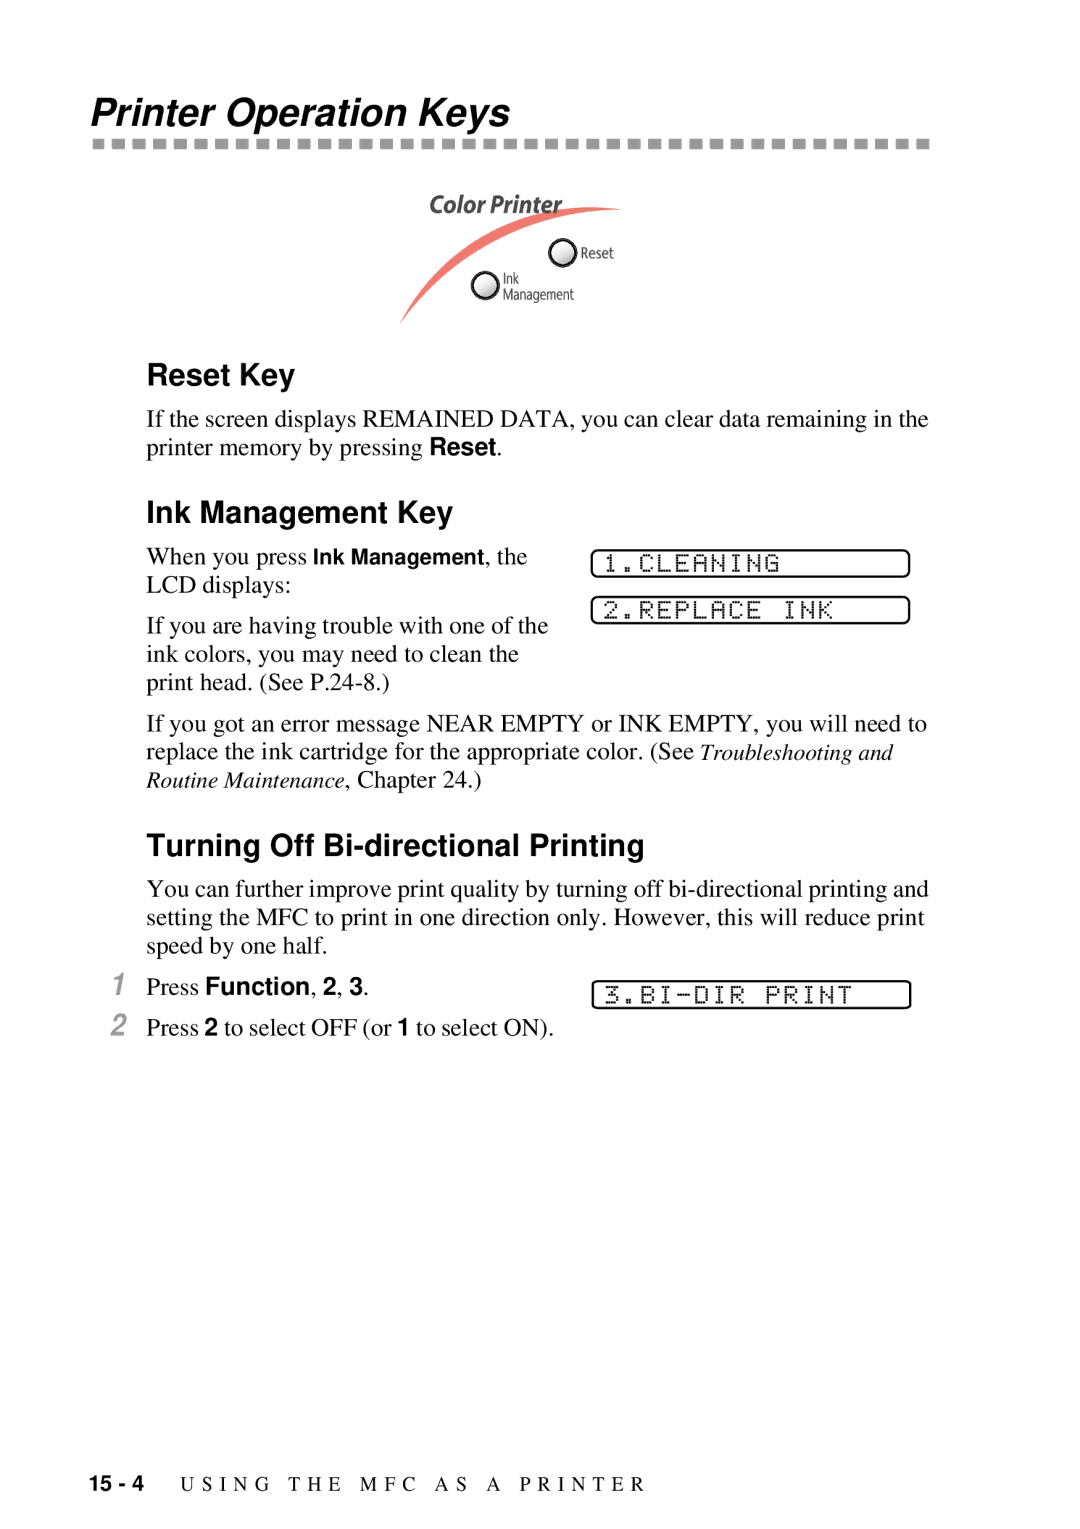 Brother MFC-7300C manual Printer Operation Keys, Reset Key, Ink Management Key, Turning Off Bi-directional Printing 